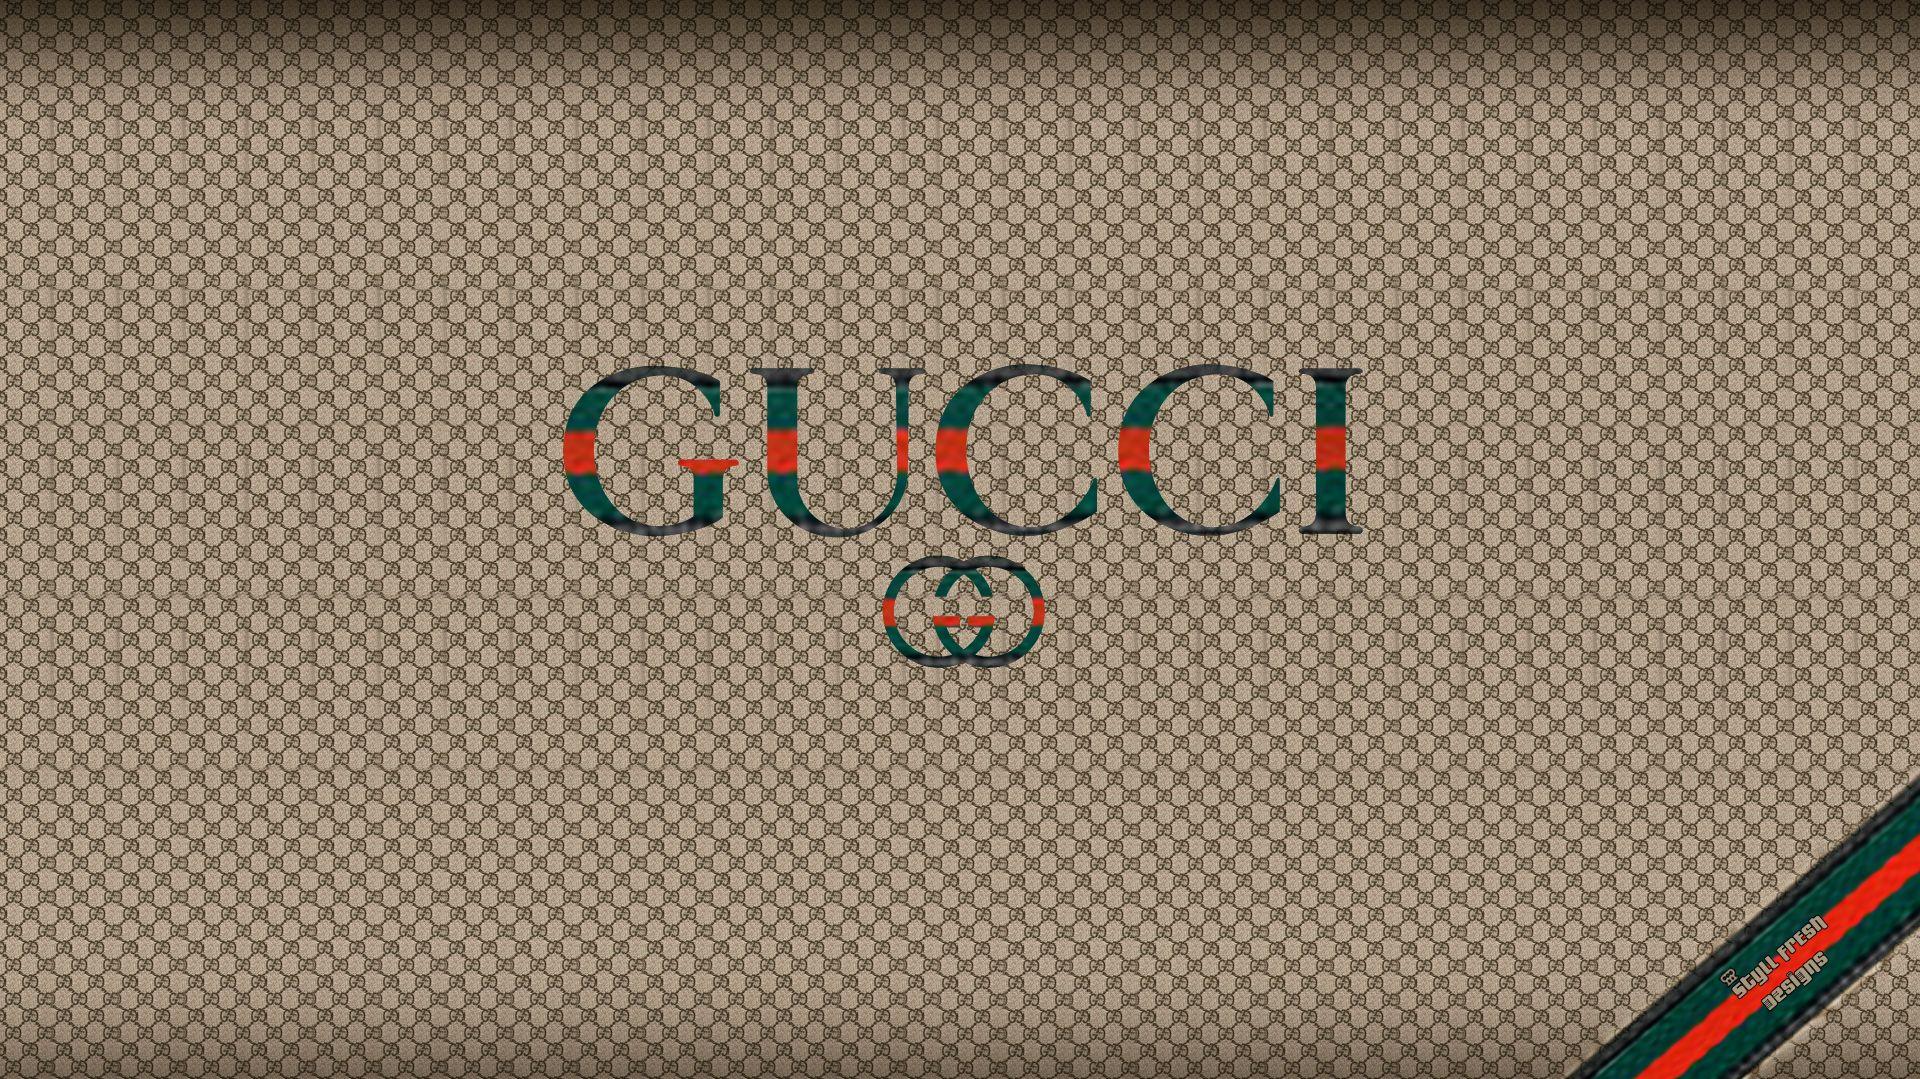 Gucci HD Wallpaper